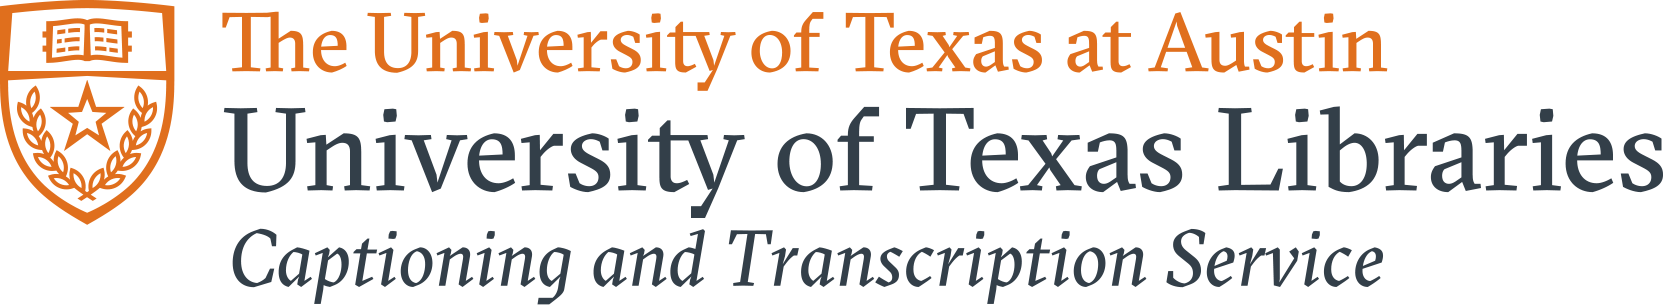 Captioning and Transcription Services logo